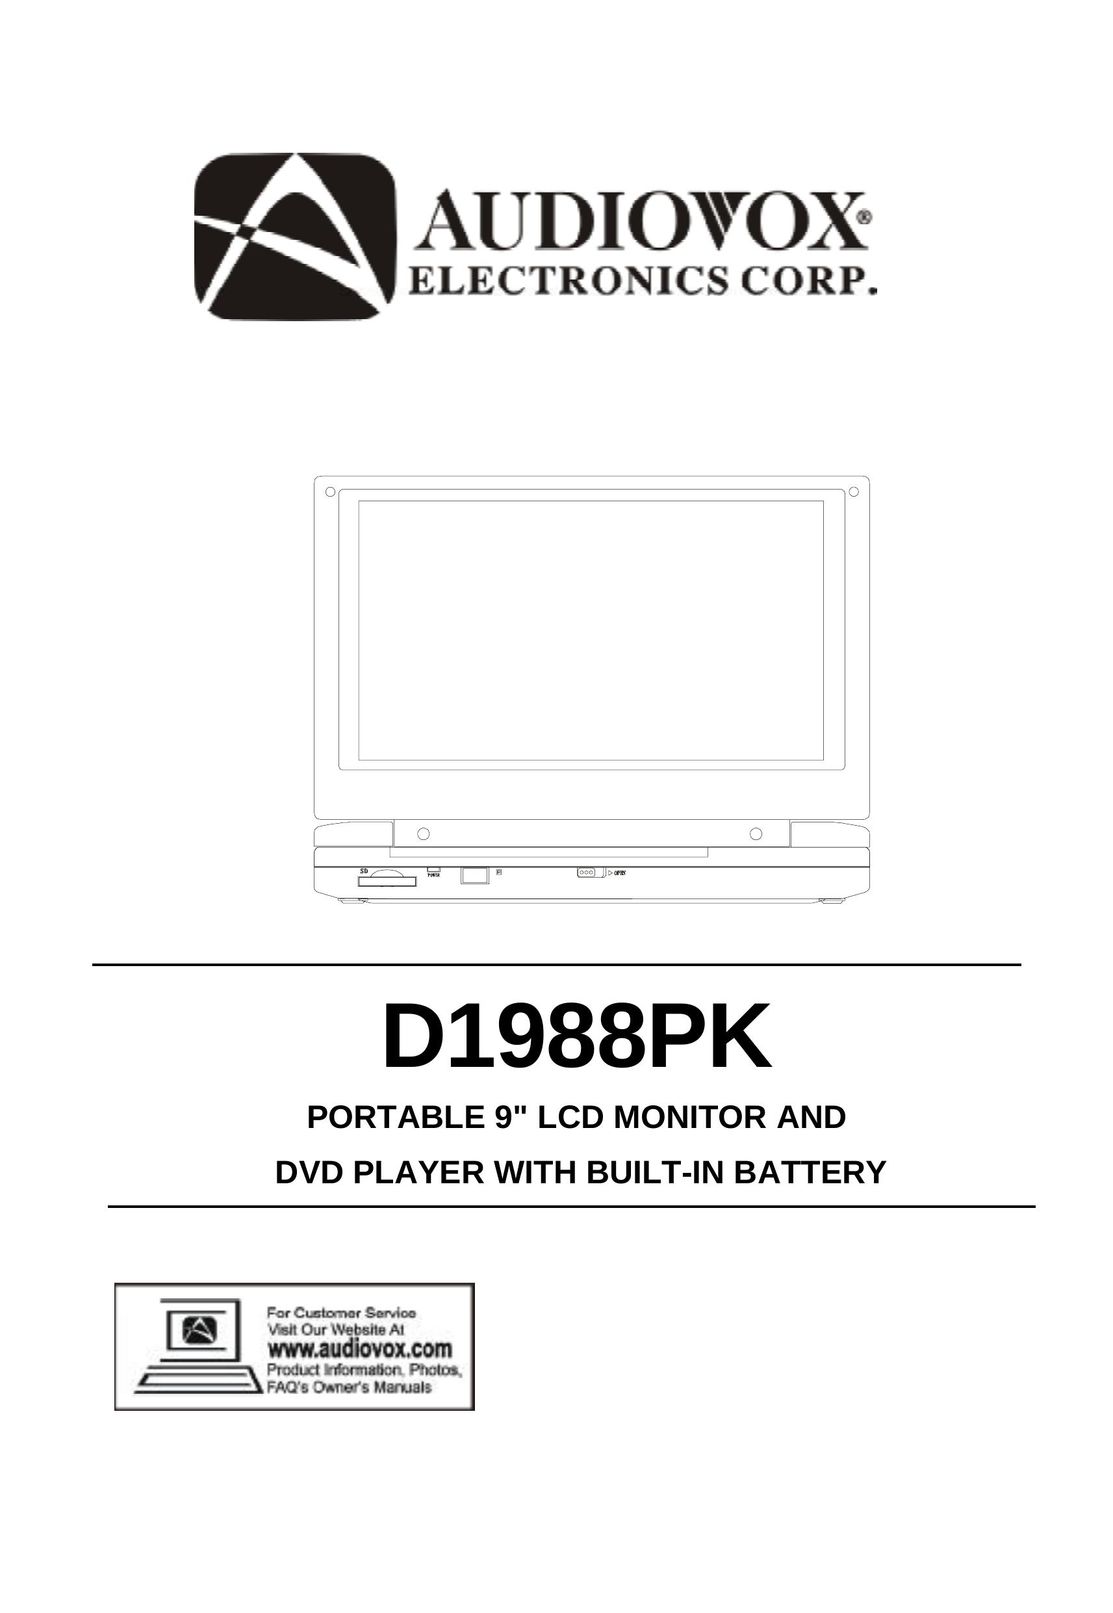 Audiovox D1988PK DVD Player User Manual